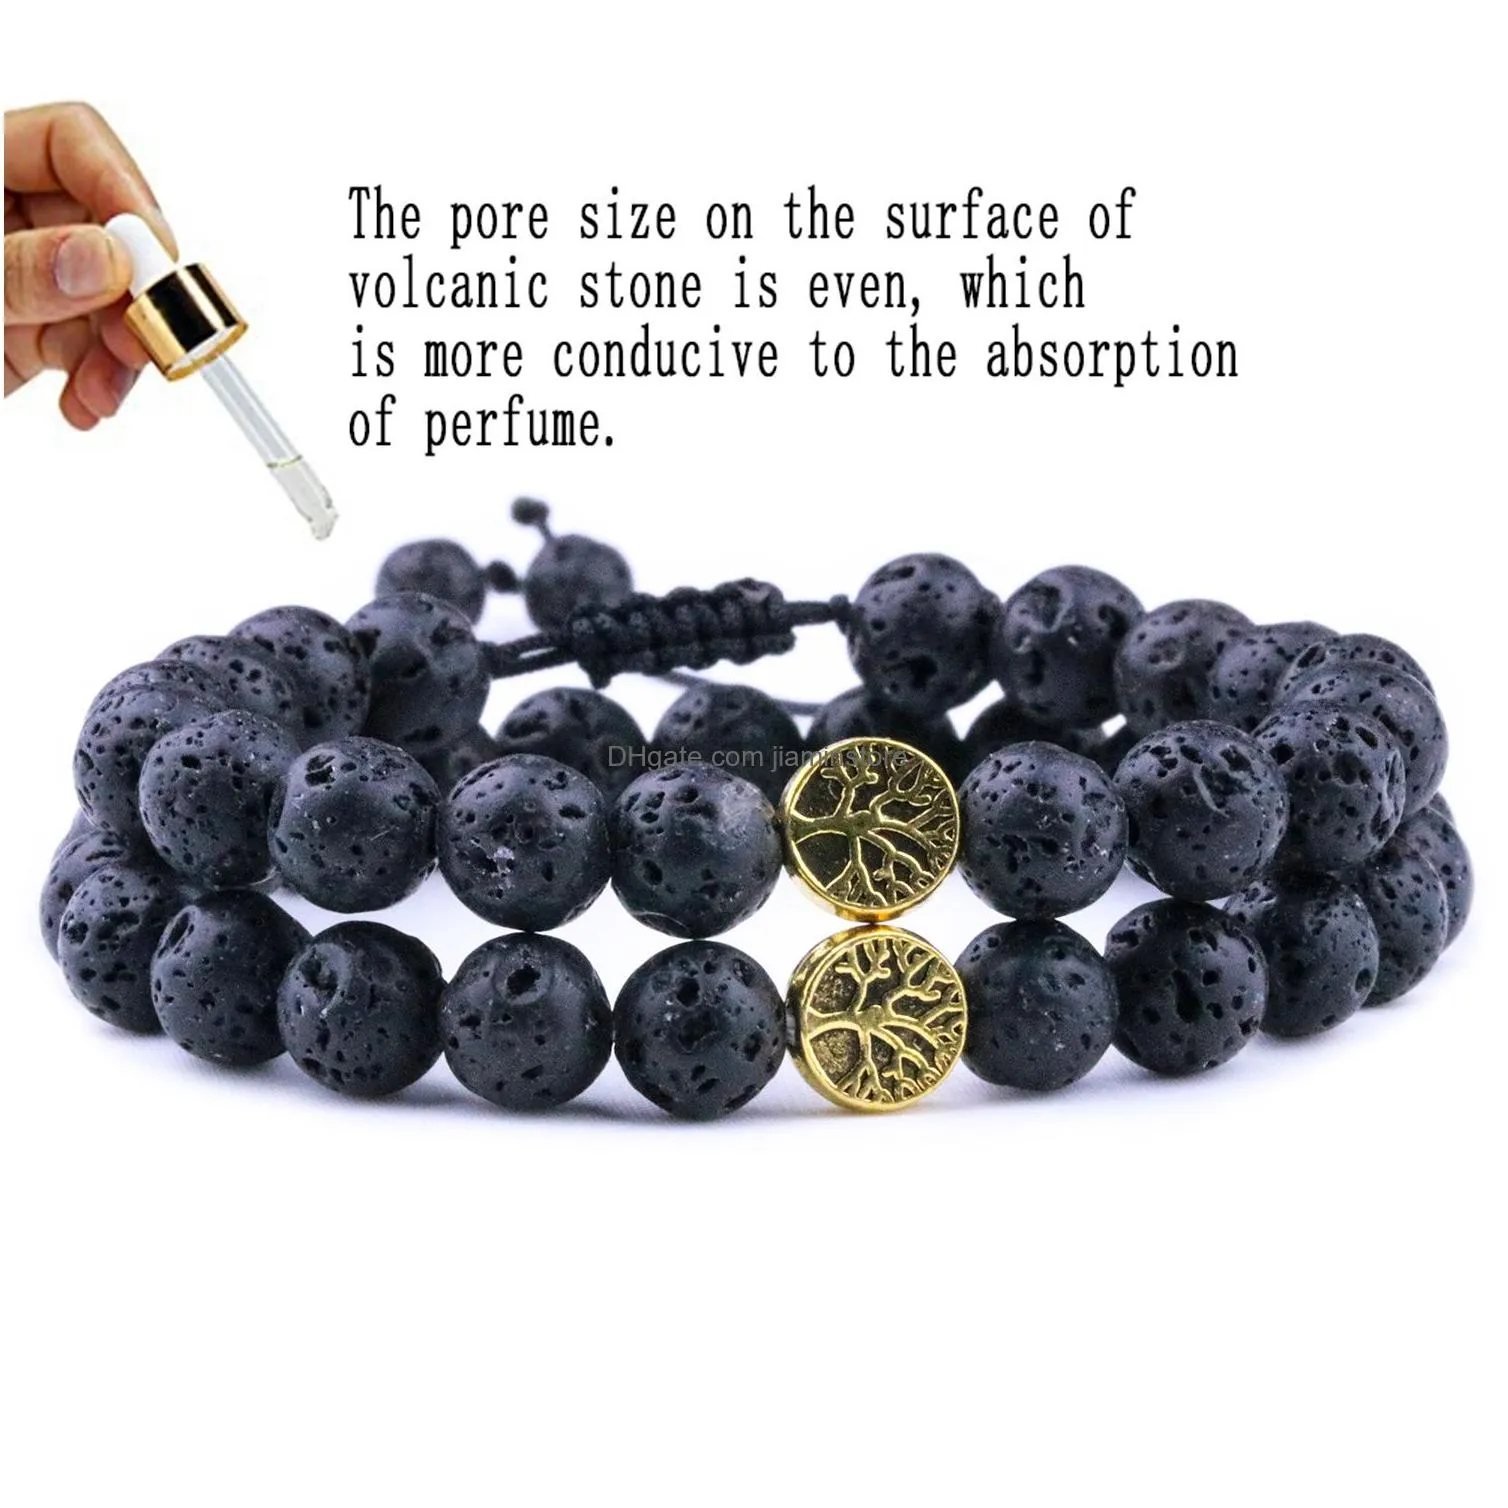 8mm black lava stone weave tree of life bracelets aromatherapy essential oil diffuser bracelet for women men jewelry